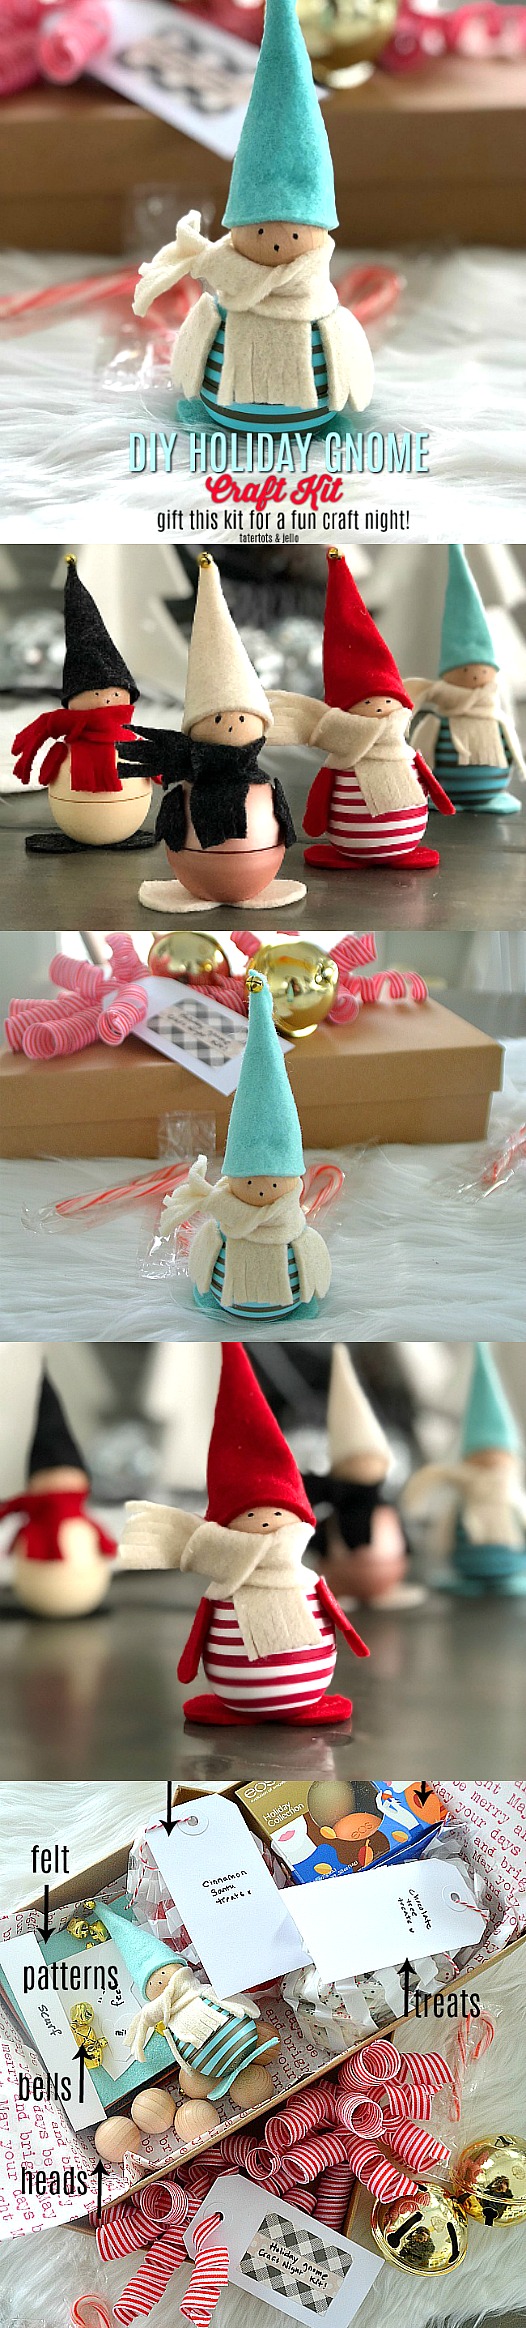 Holiday Gnome Craft Kit - fun craft night idea! 